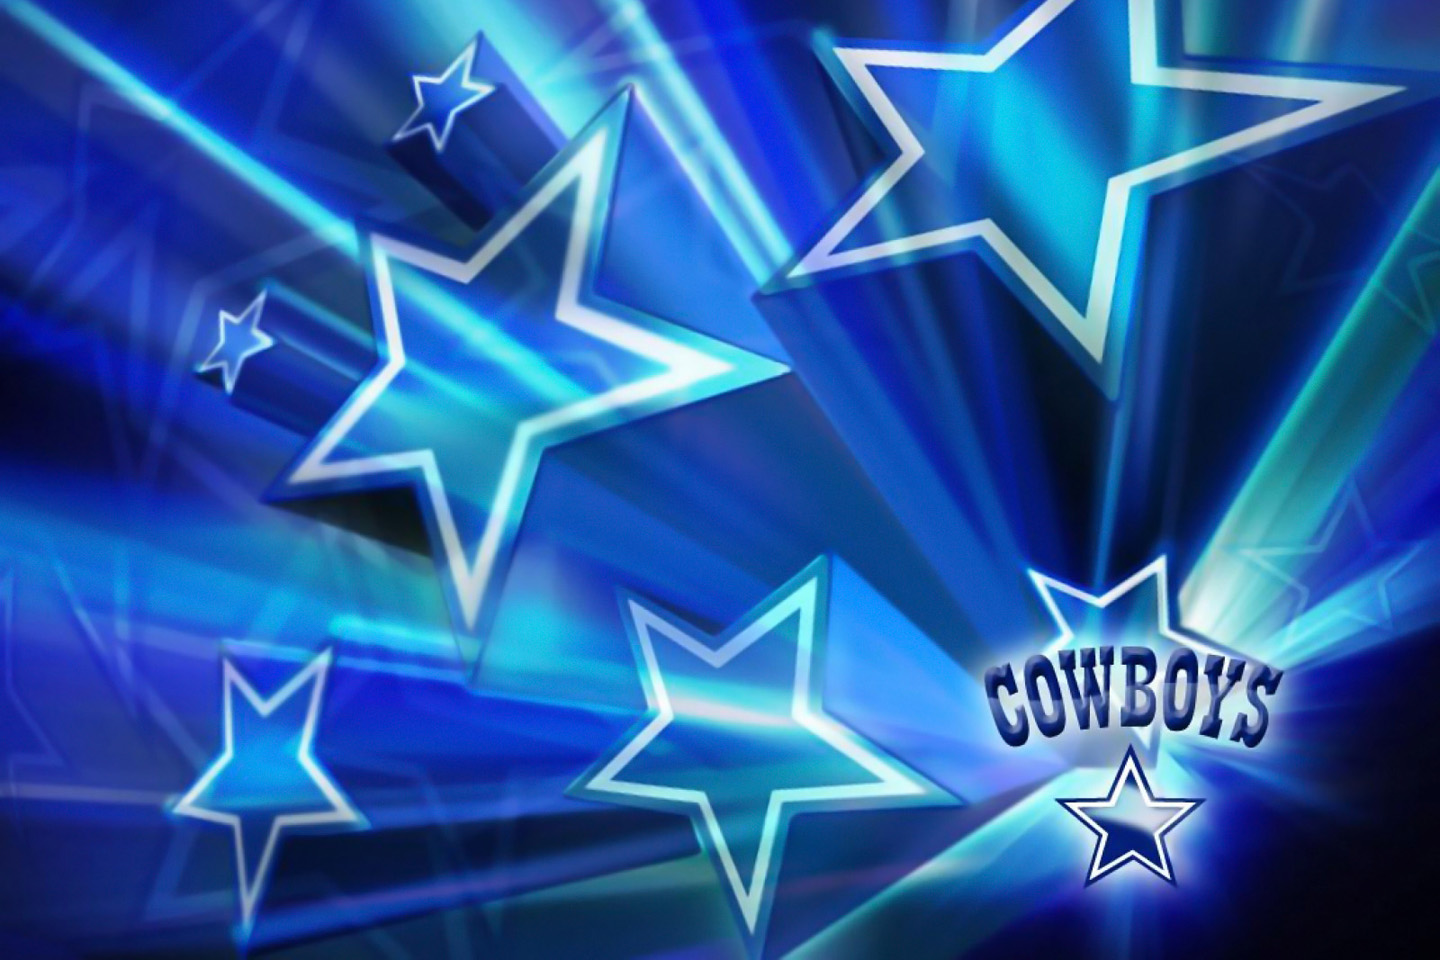 Free download of the day Dallas Cowboys wallpaper Dallas Cowboys